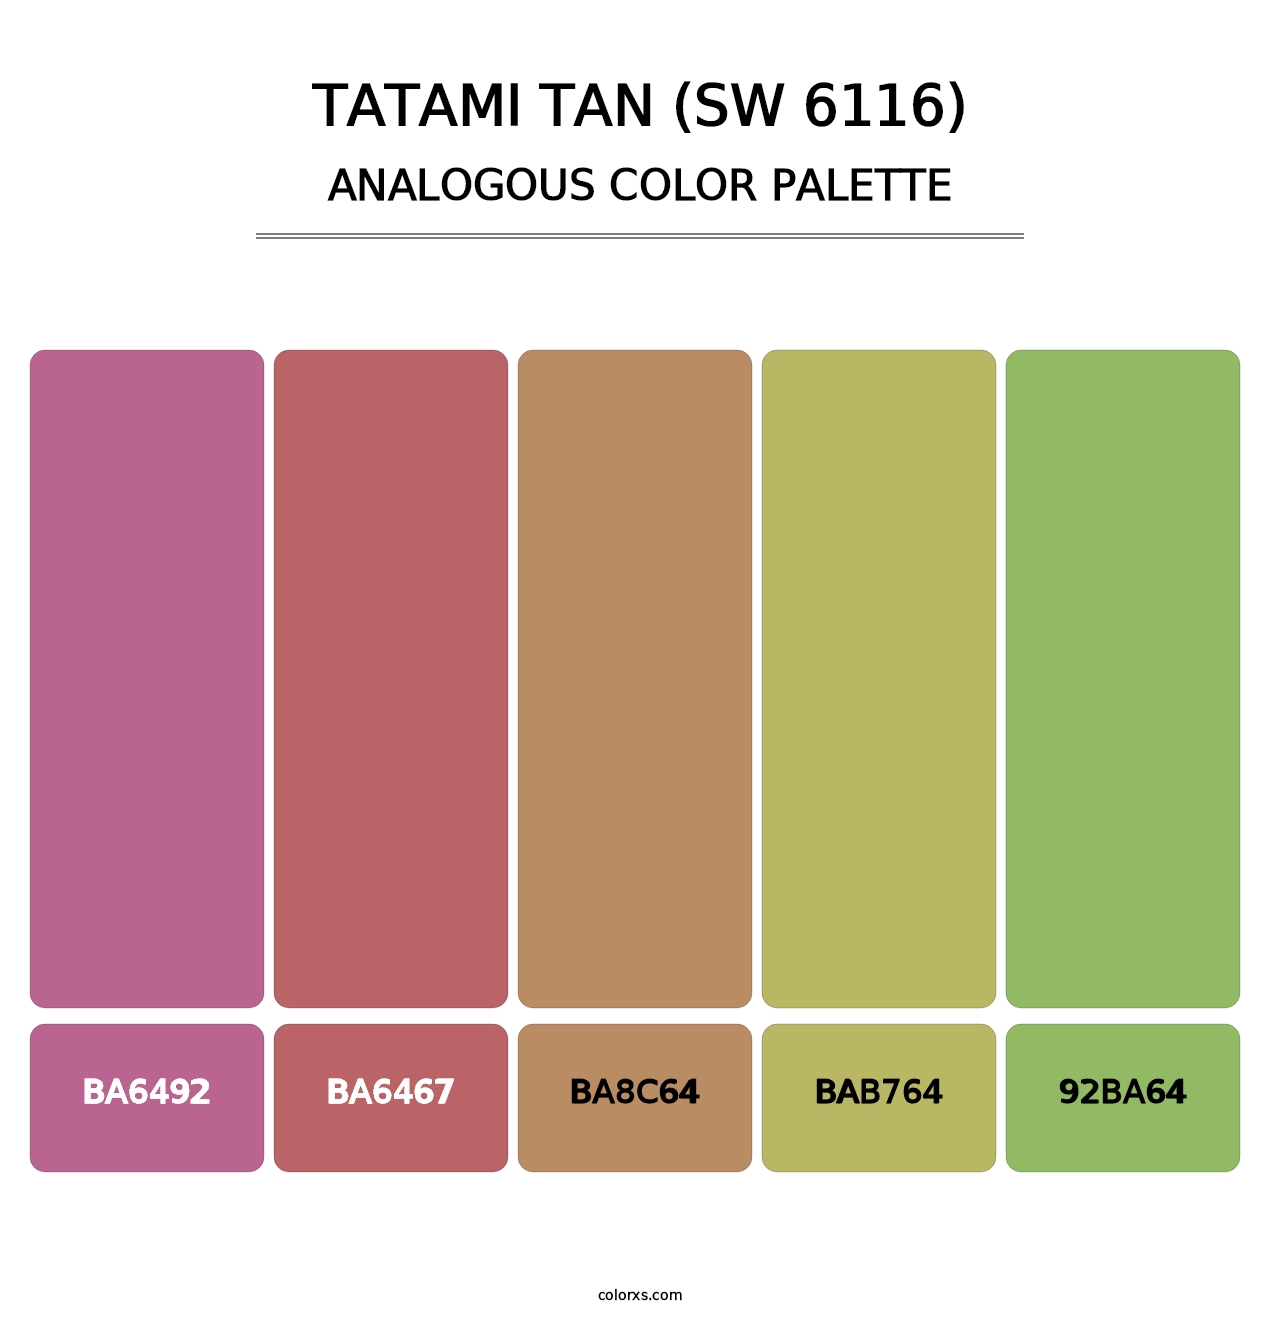 Tatami Tan (SW 6116) - Analogous Color Palette